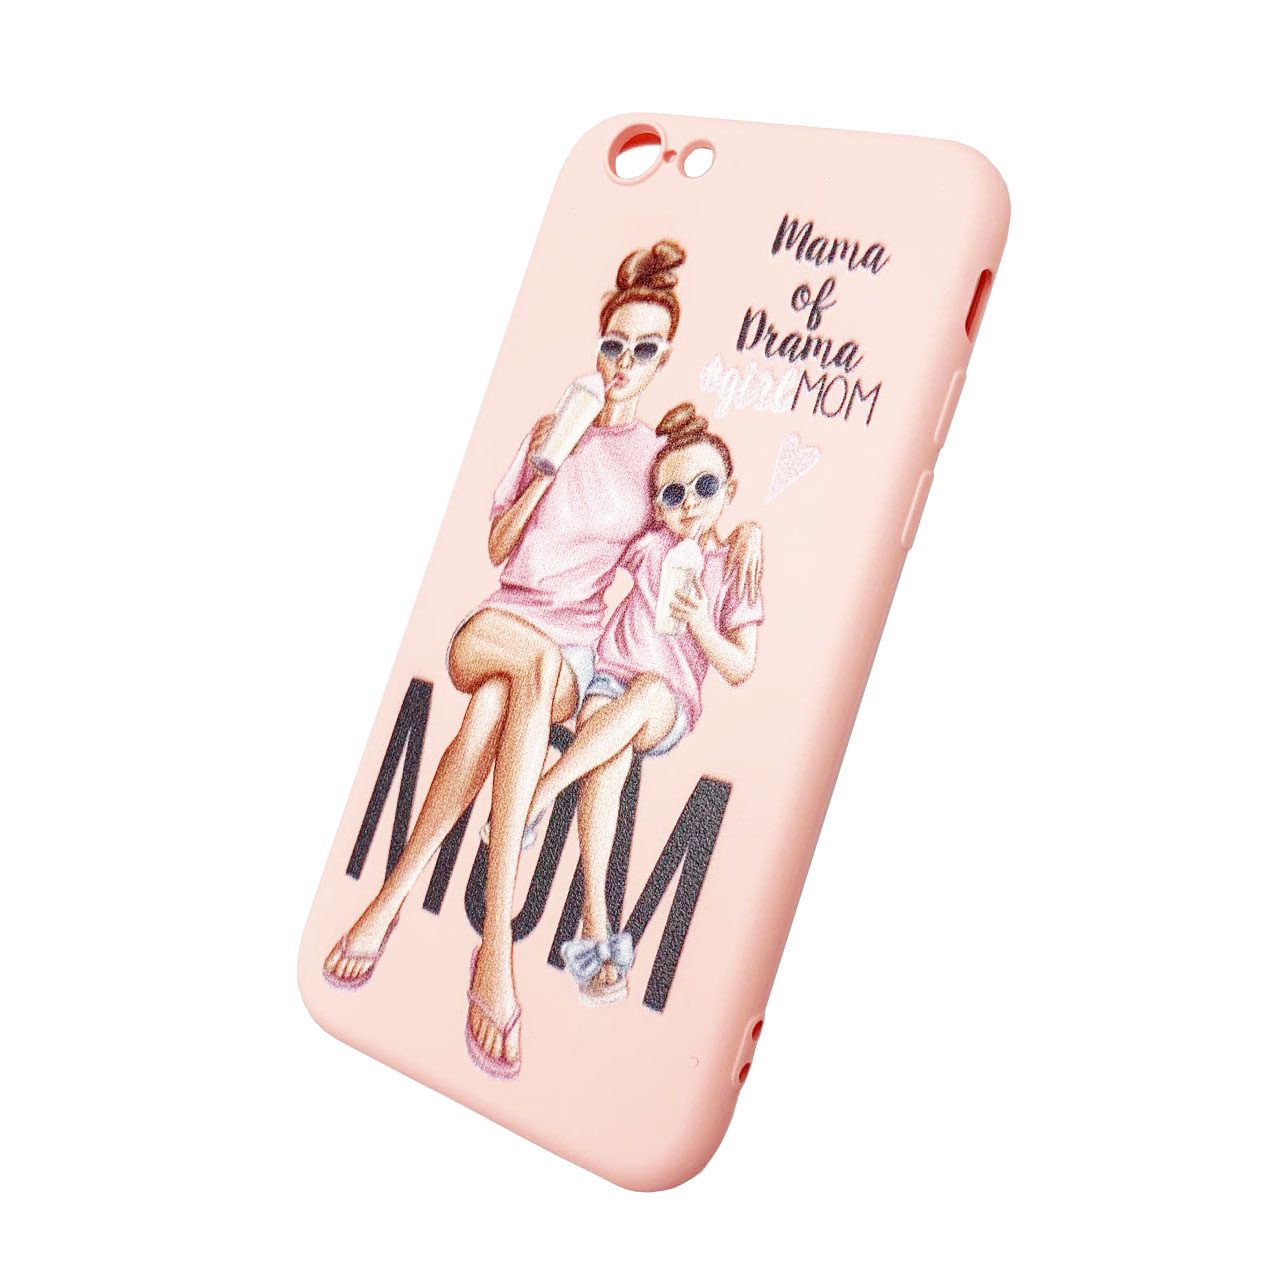 Чехол накладка для APPLE iPhone 6, 6S, силикон, рисунок Mama of Drama Girl MOM.